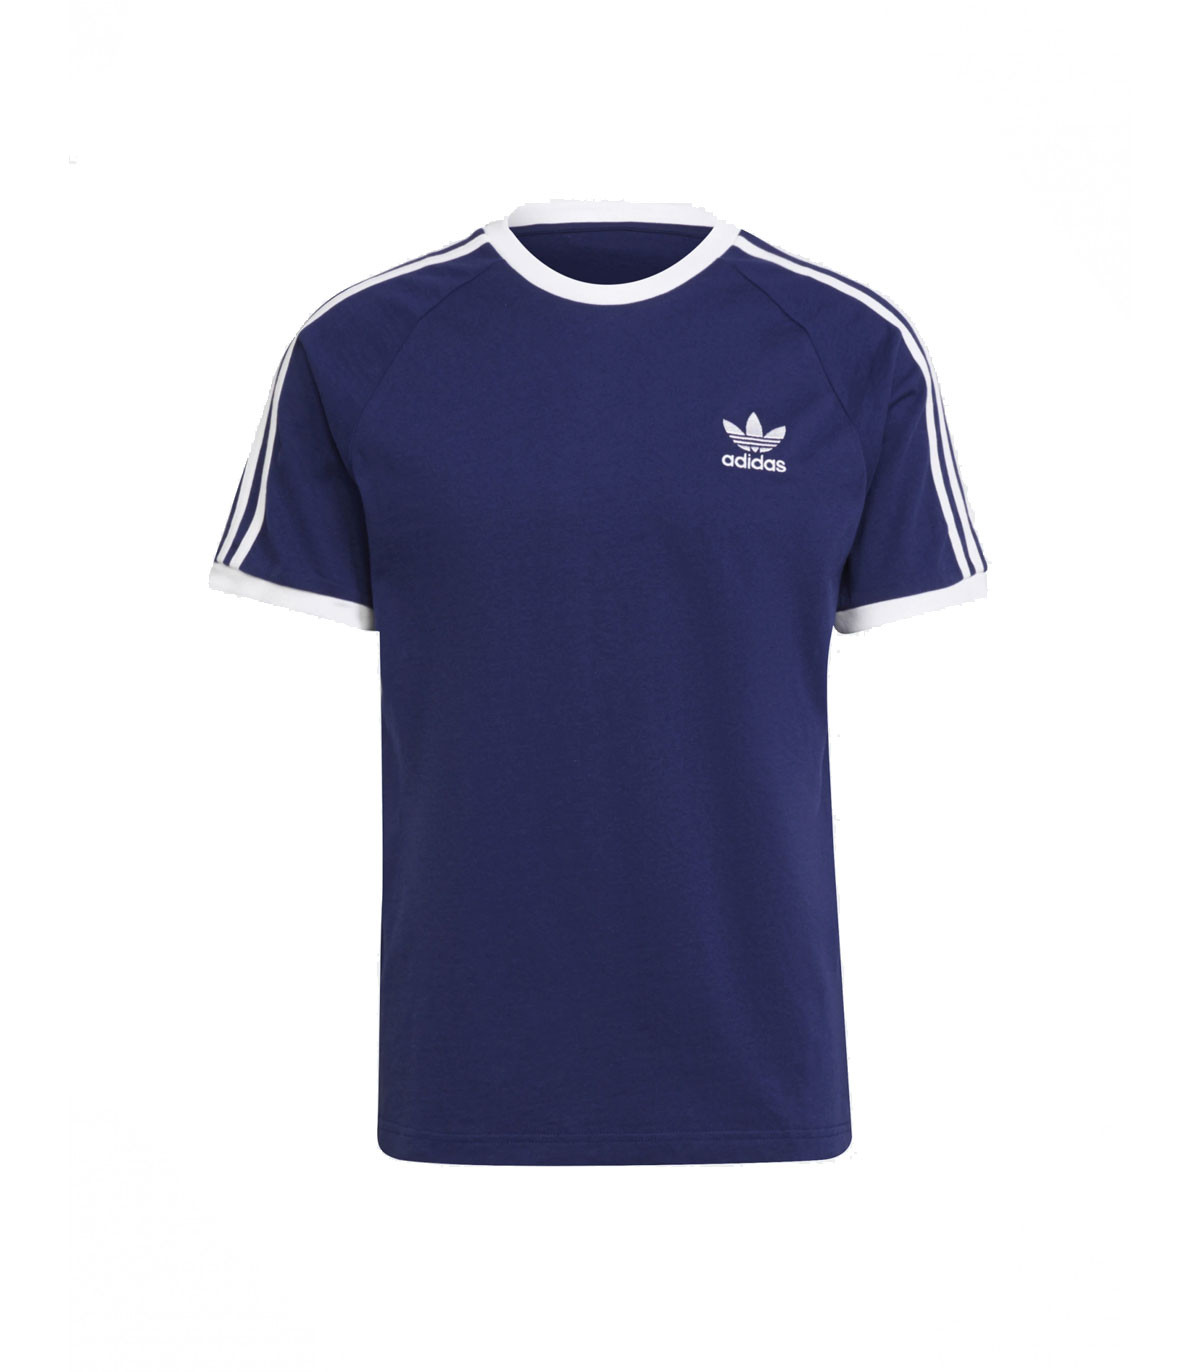 Adidas - Camiseta Hombre Azul - Adicolor Classics 3 Bandas